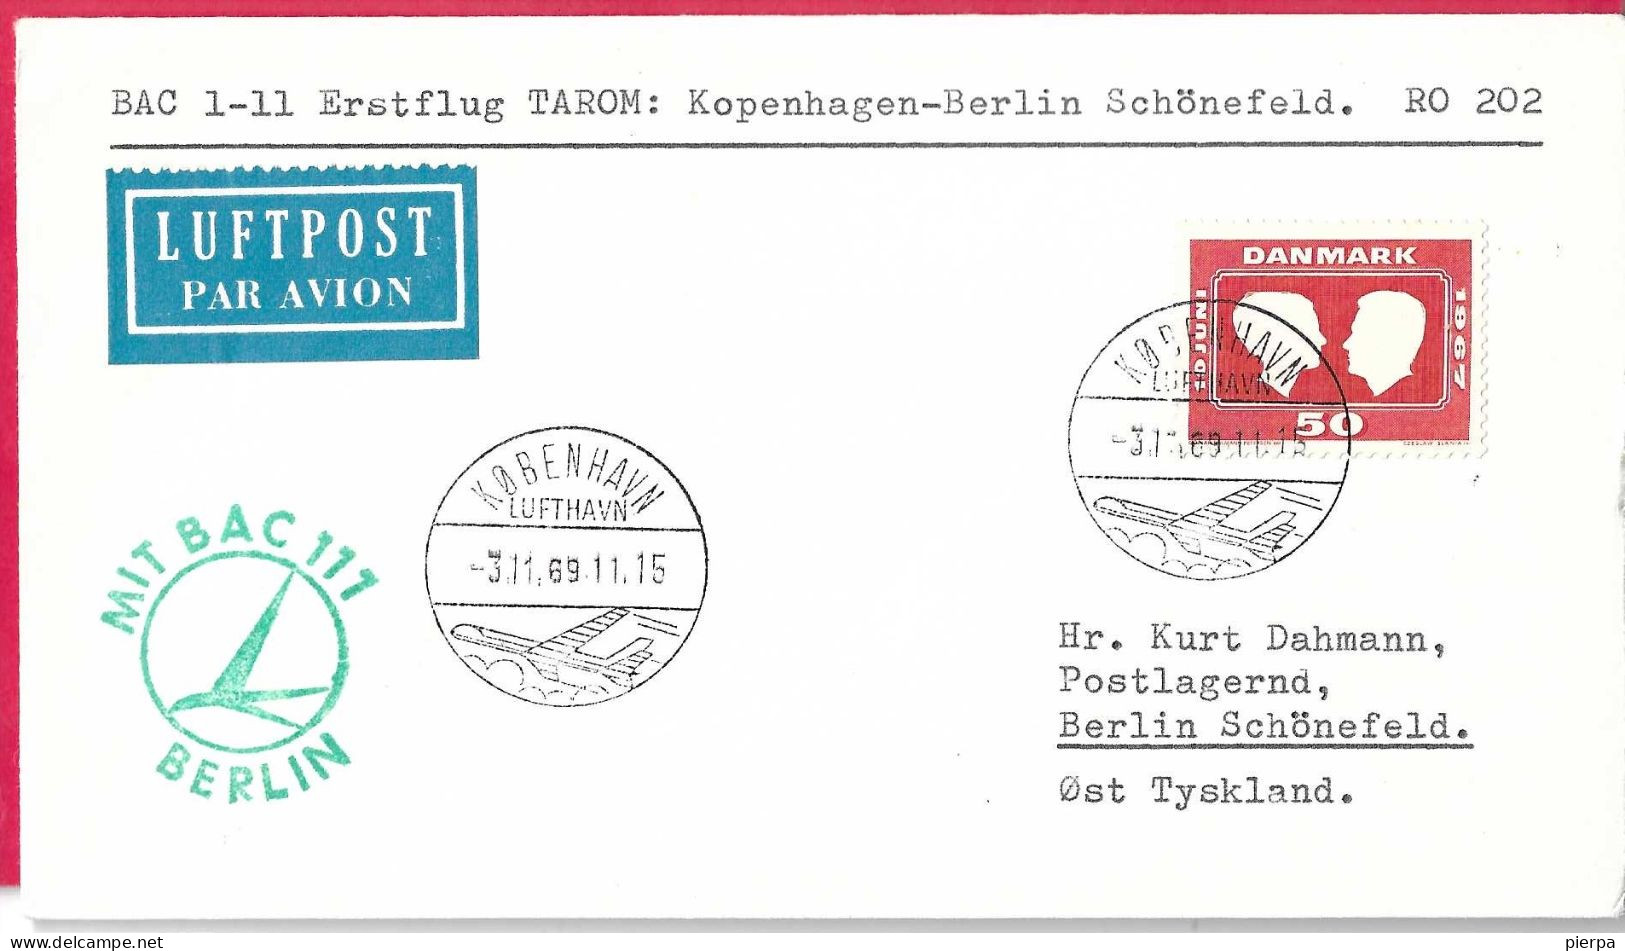 DANMARK - FIRST FLIGHT TAROM WITH BAC 117 FROM KOBENHAVN TO BERLIN/SCHONEFELD *3.11.69* ON OFFICIAL COVER - Luchtpostzegels